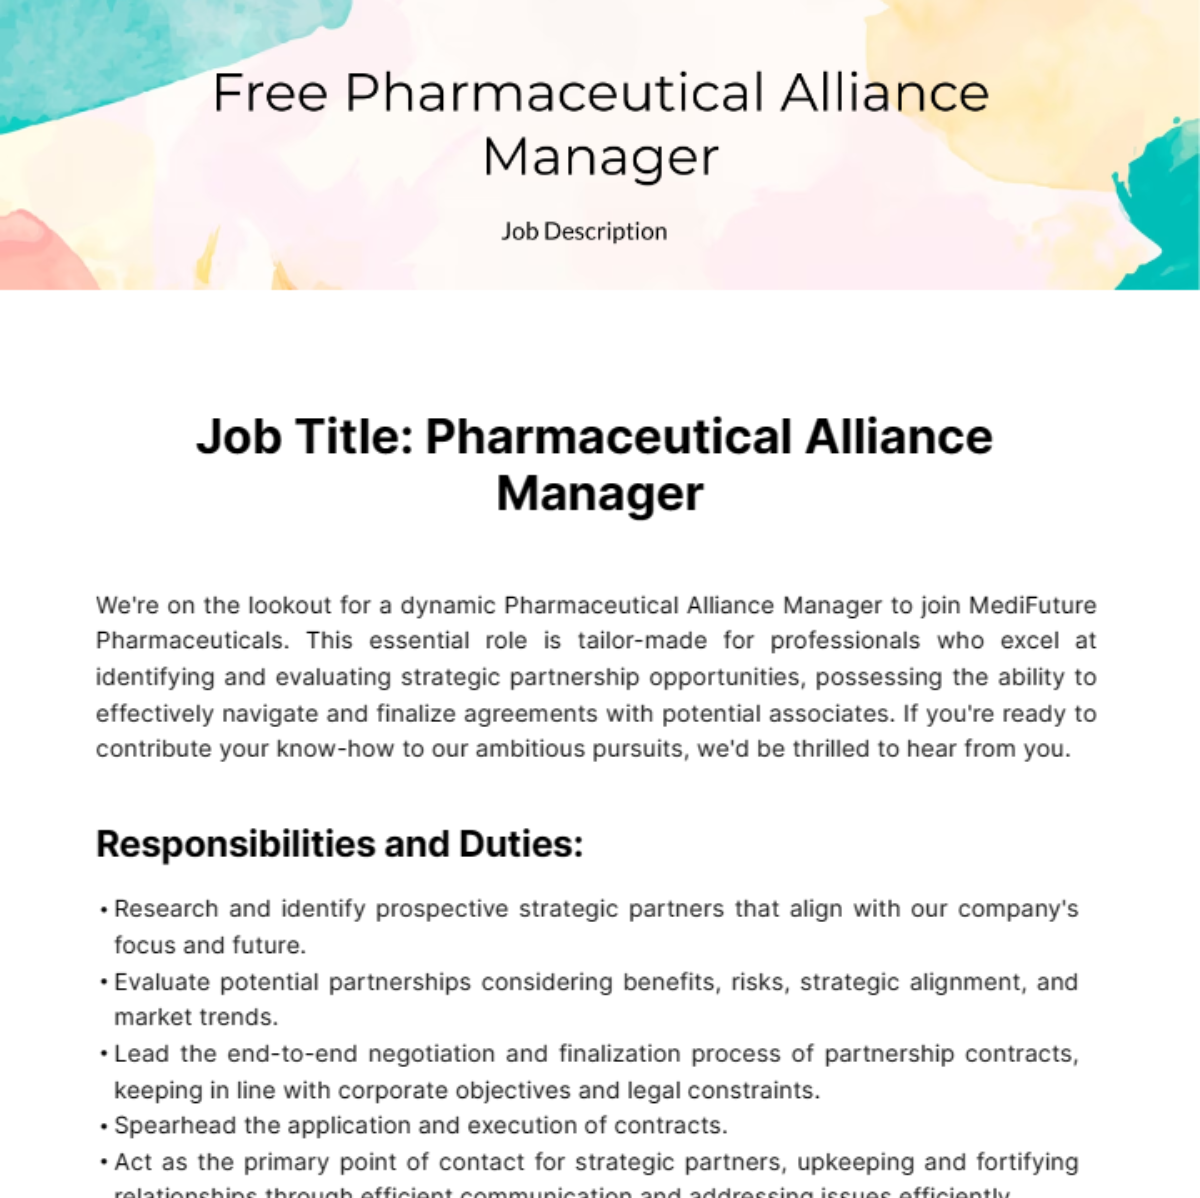 Free Pharmaceutical Alliance Manager Job Description Template